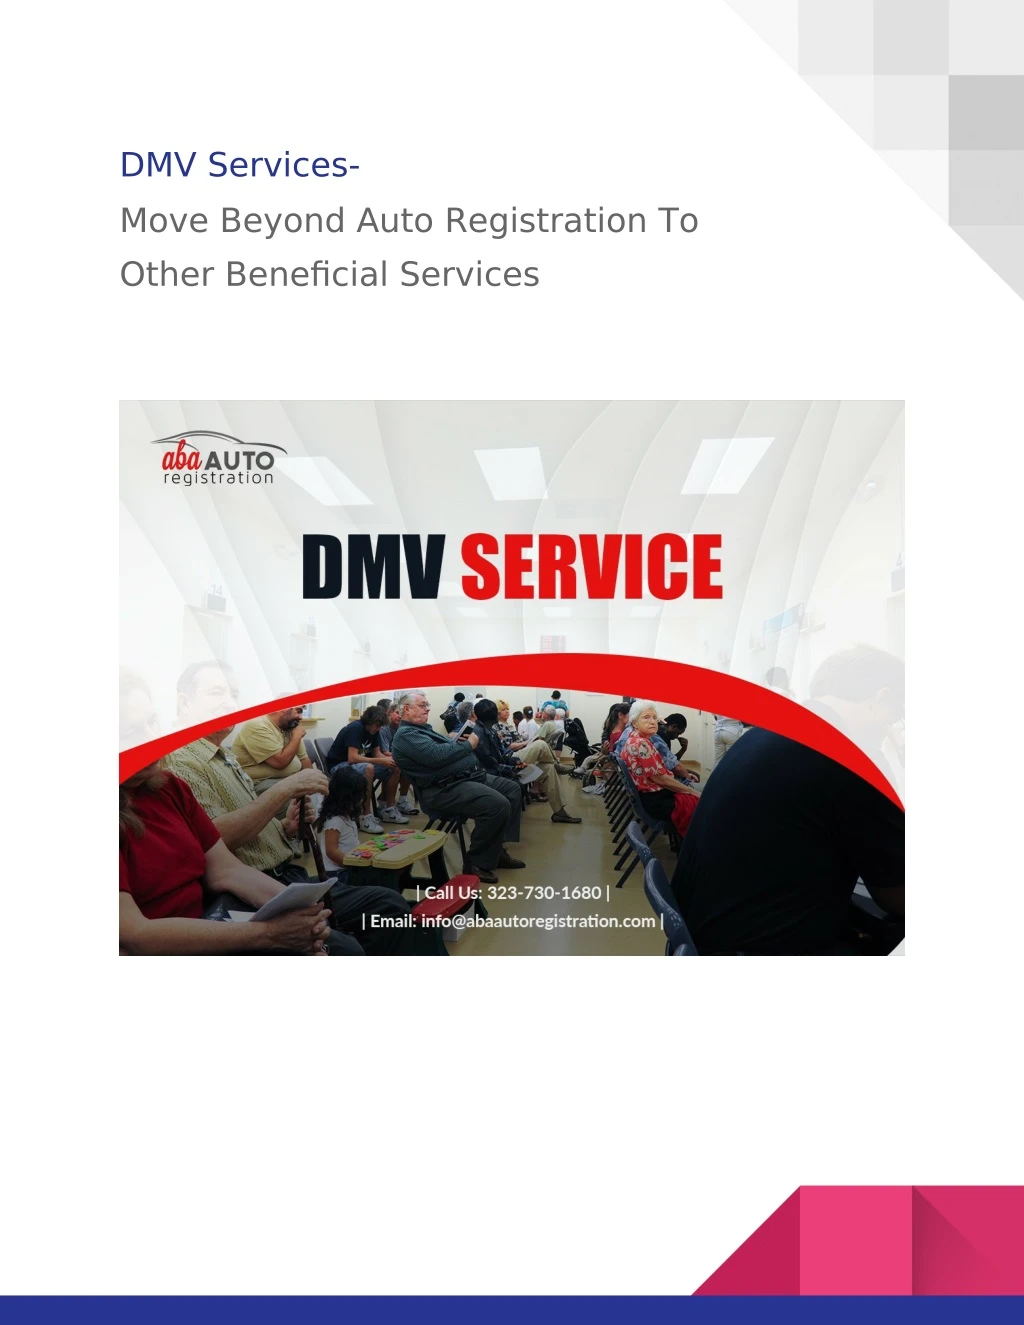 dmv services